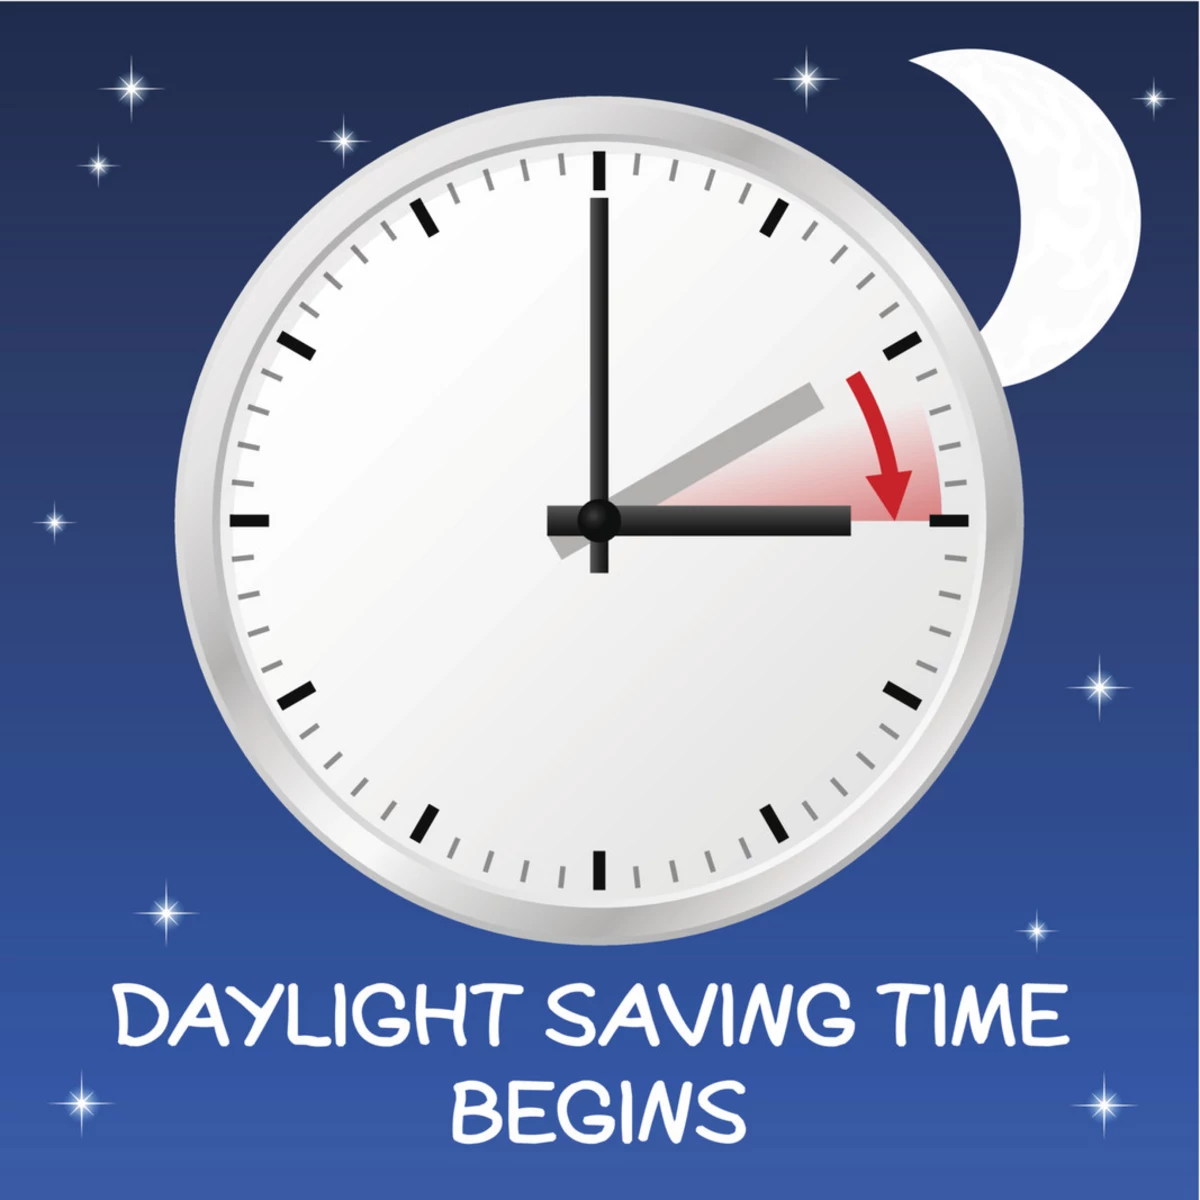 Daylight saving time returns